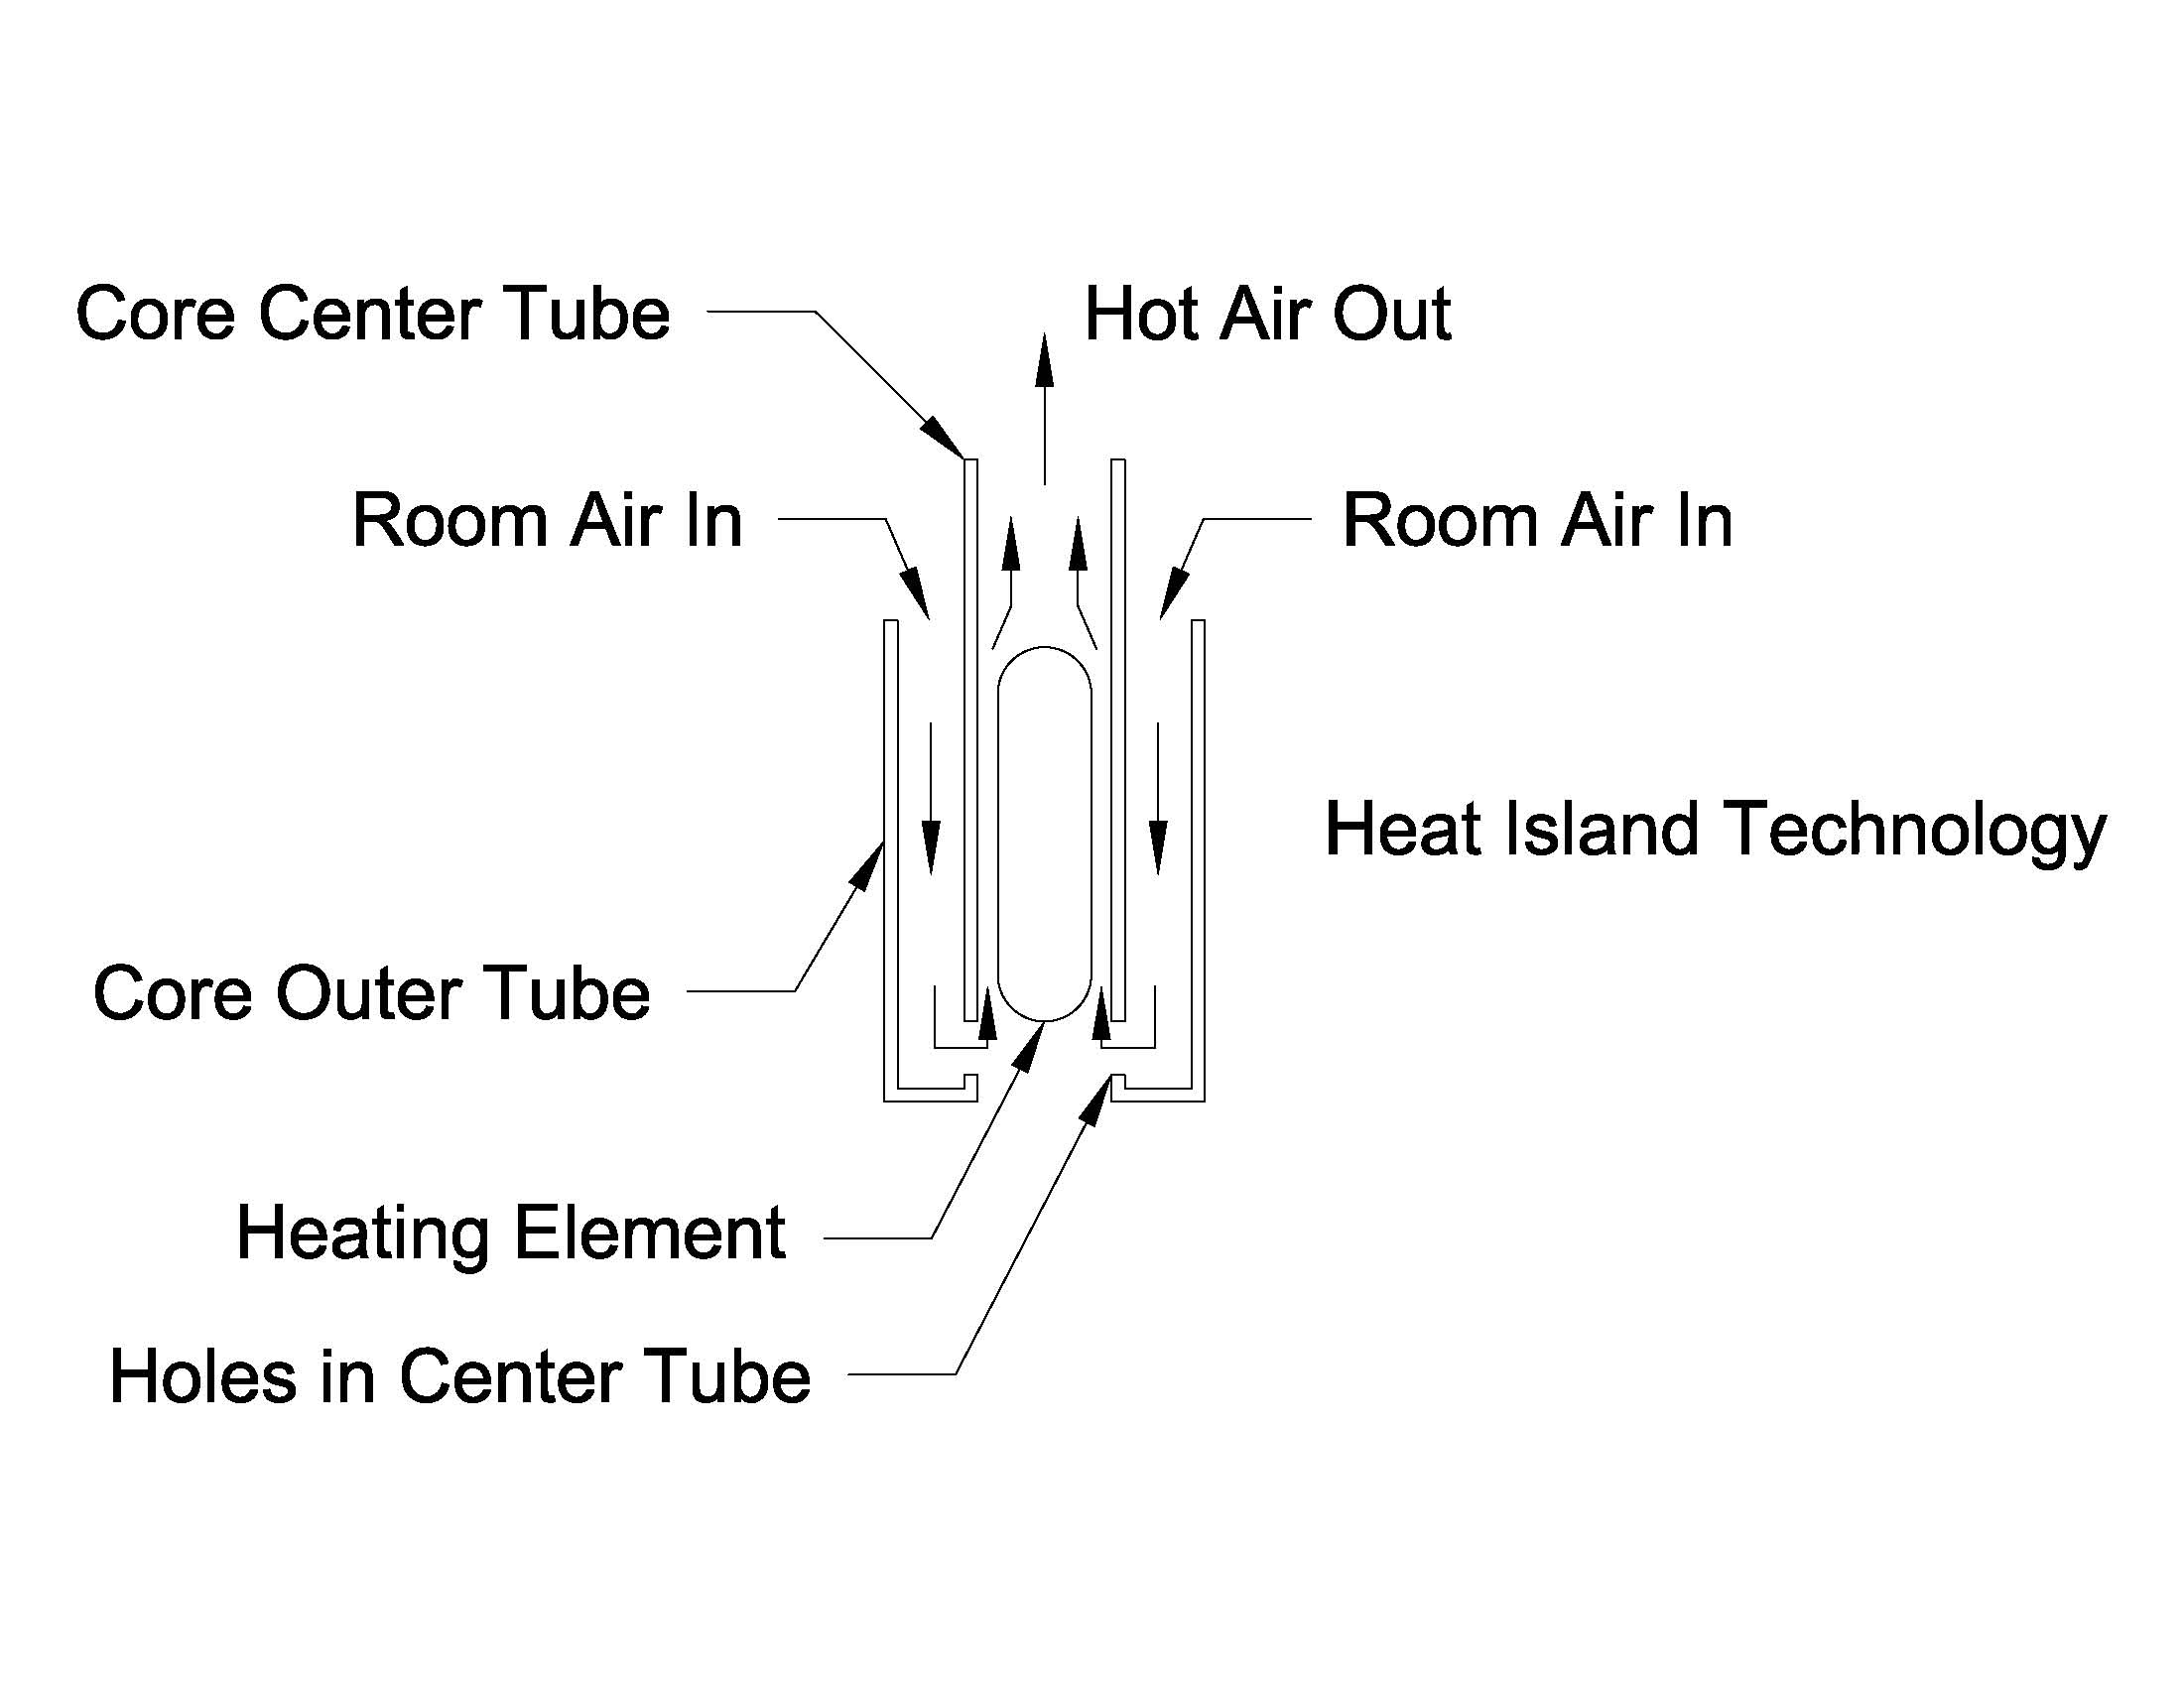 heatislandtechnology.jpg